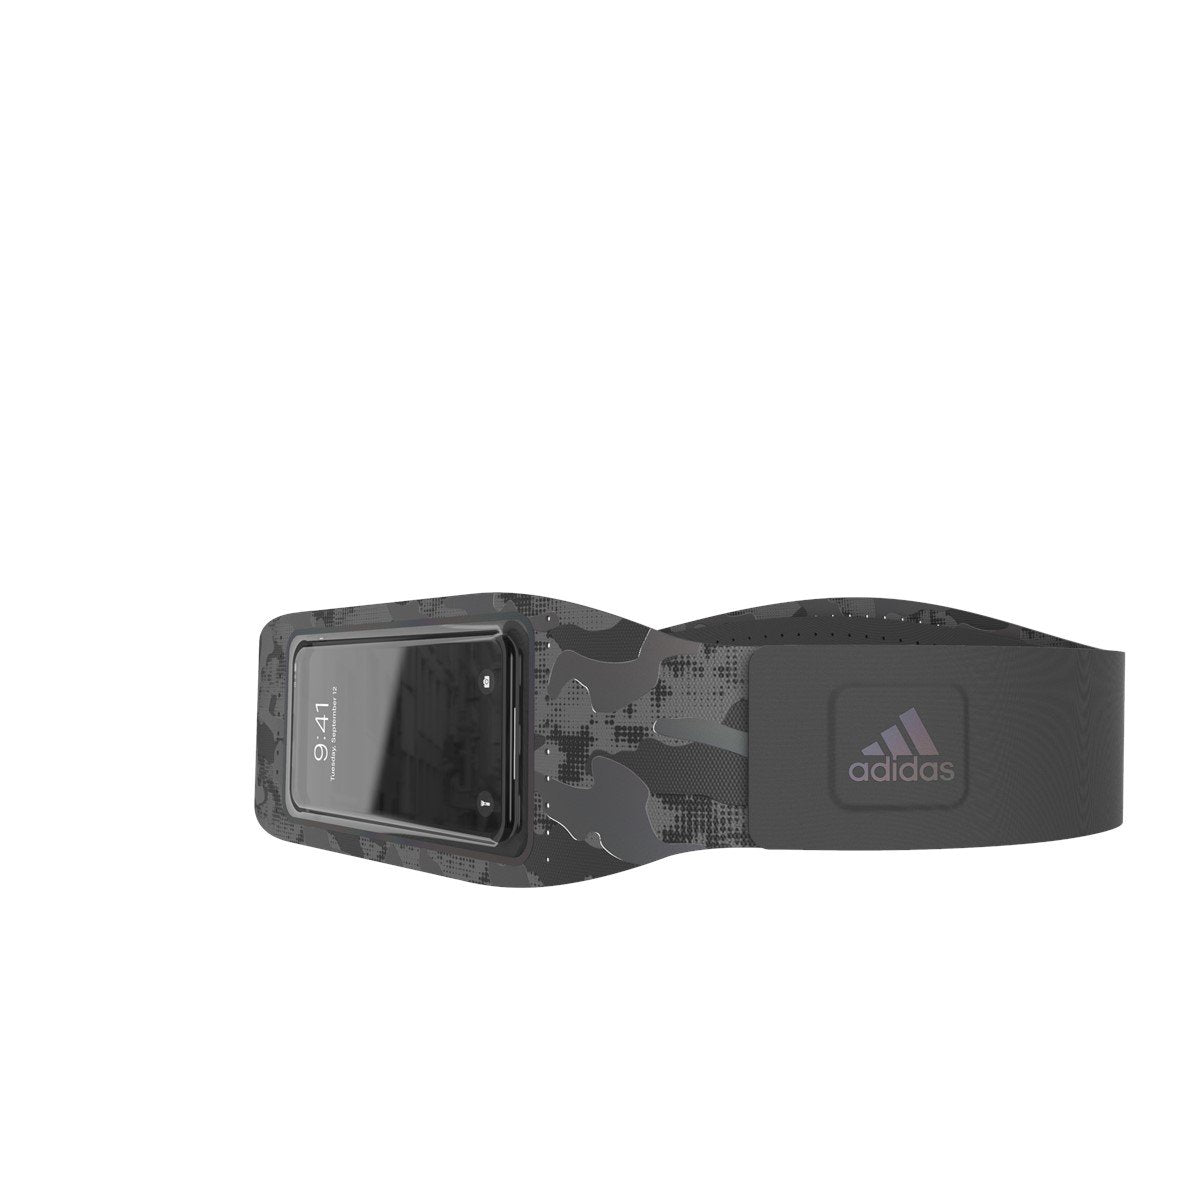 Adidas Originals Universal Sports Belt Phone Holder - Touchscreen Compatible, Adjustable Strap, Reflective Denim print, 3x pockets including a key pocket, Fits up to 6.5